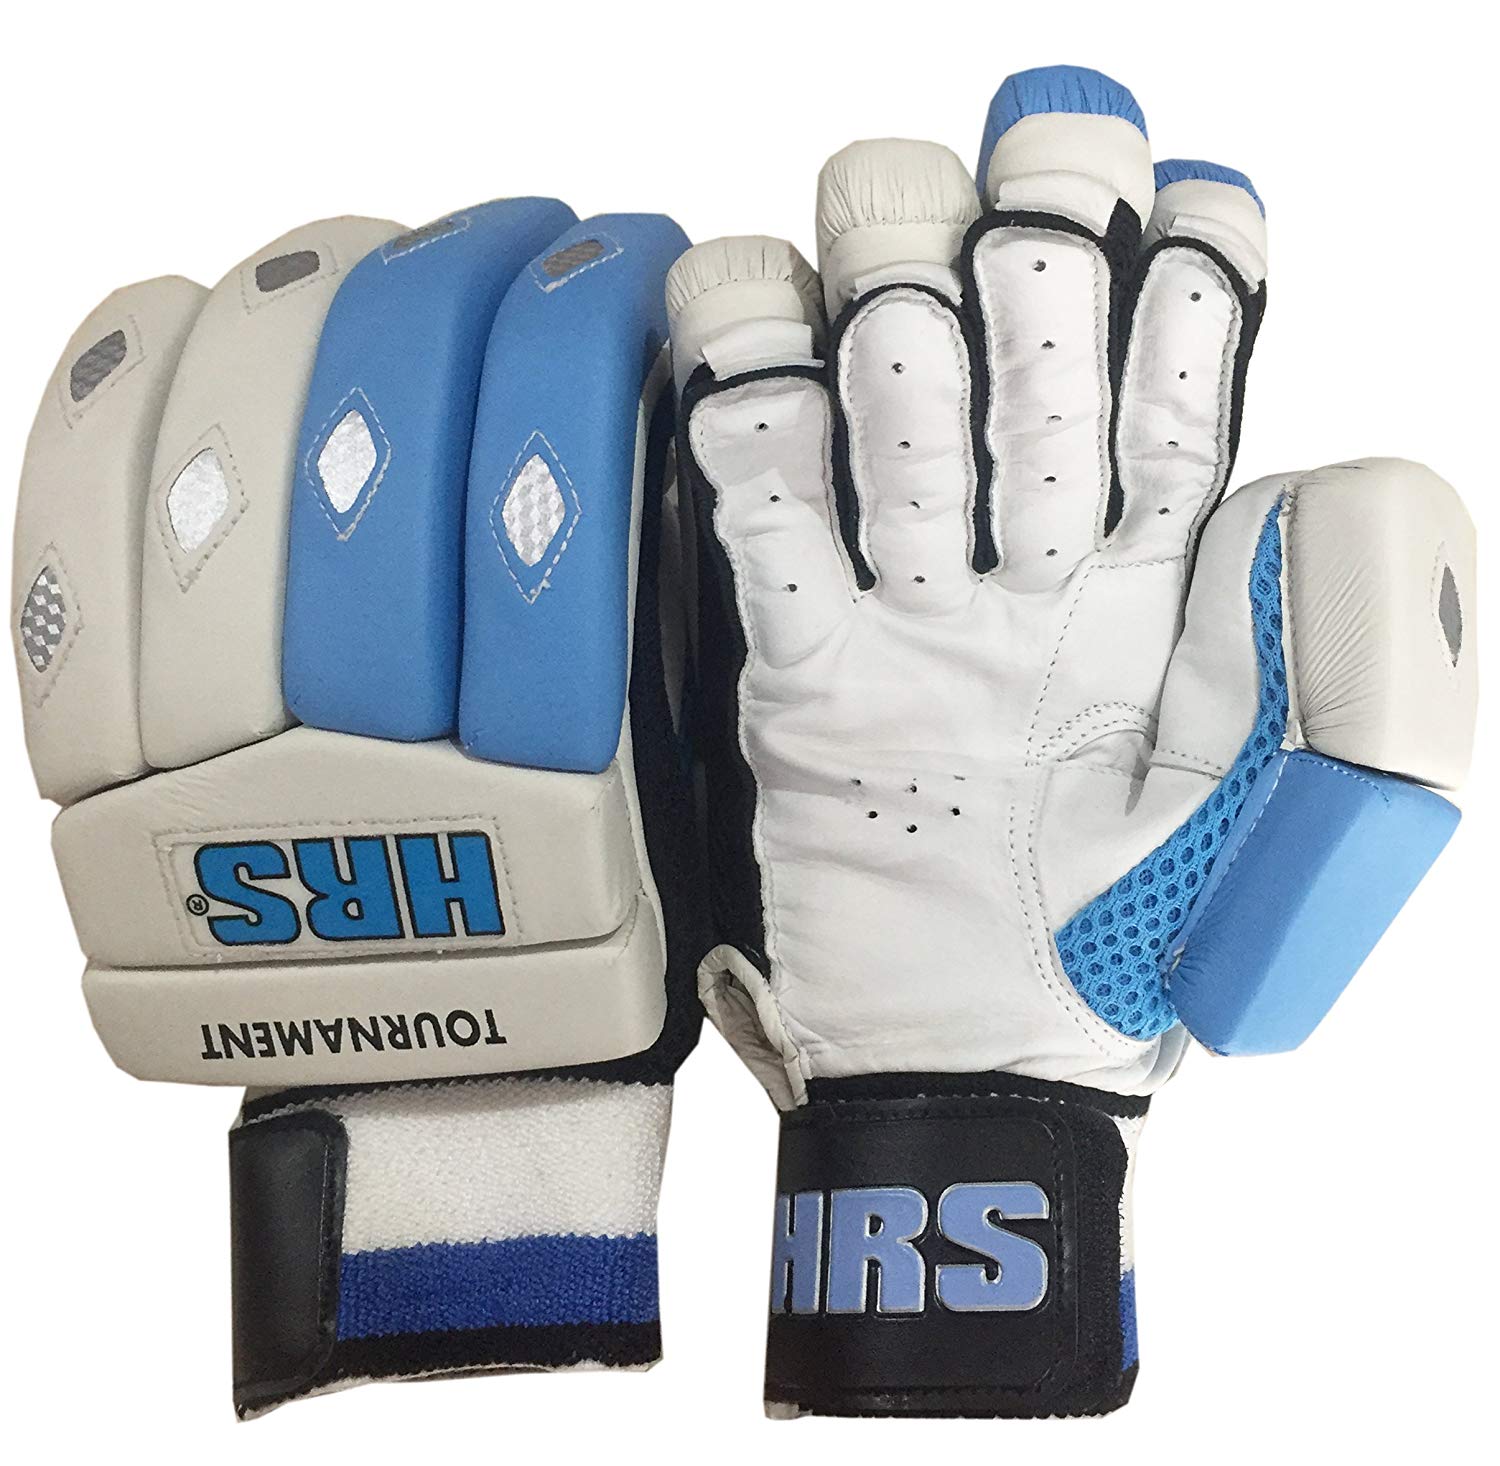 HRS Tournament Right Hand Batting Gloves (White/Blue) - Best Price online Prokicksports.com